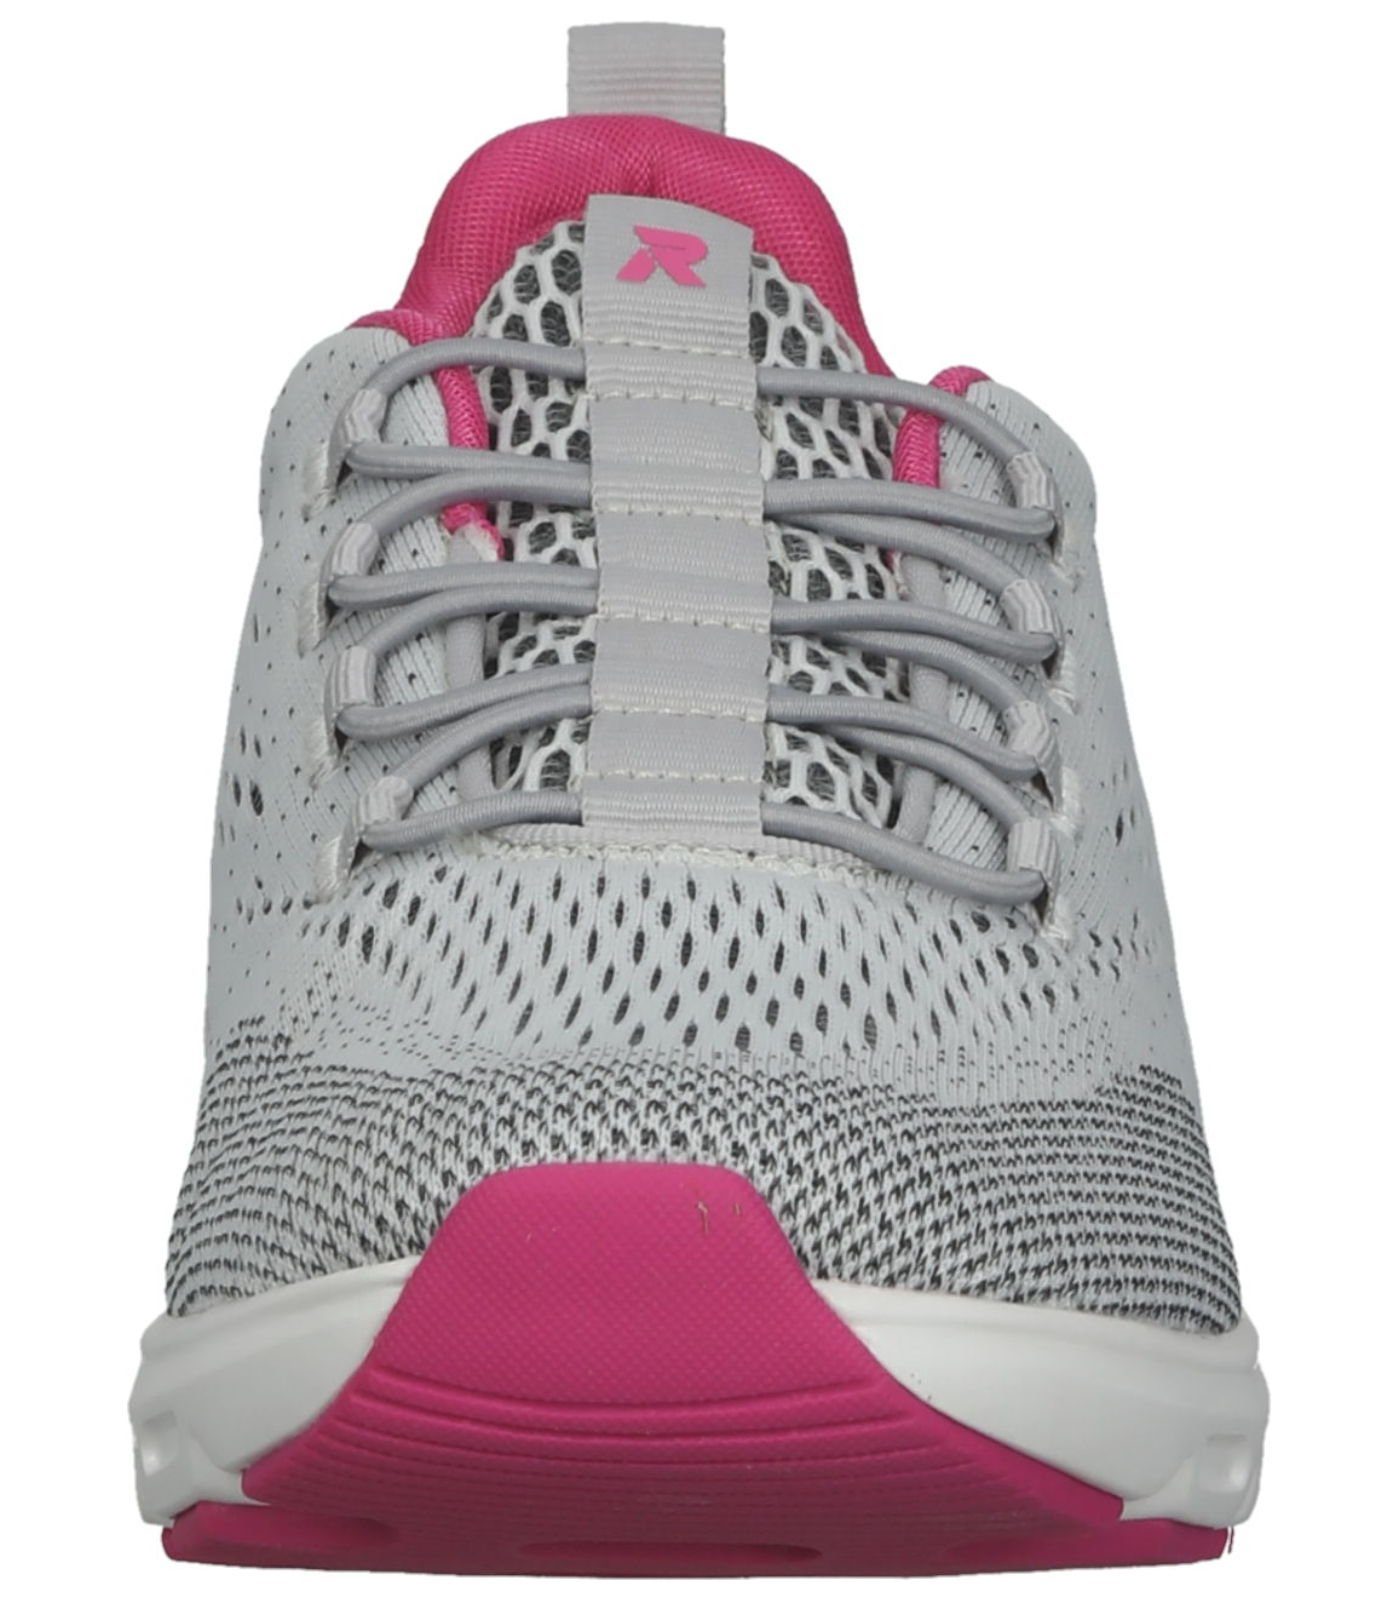 Rieker Sneaker Textil Sneaker Grau Pink